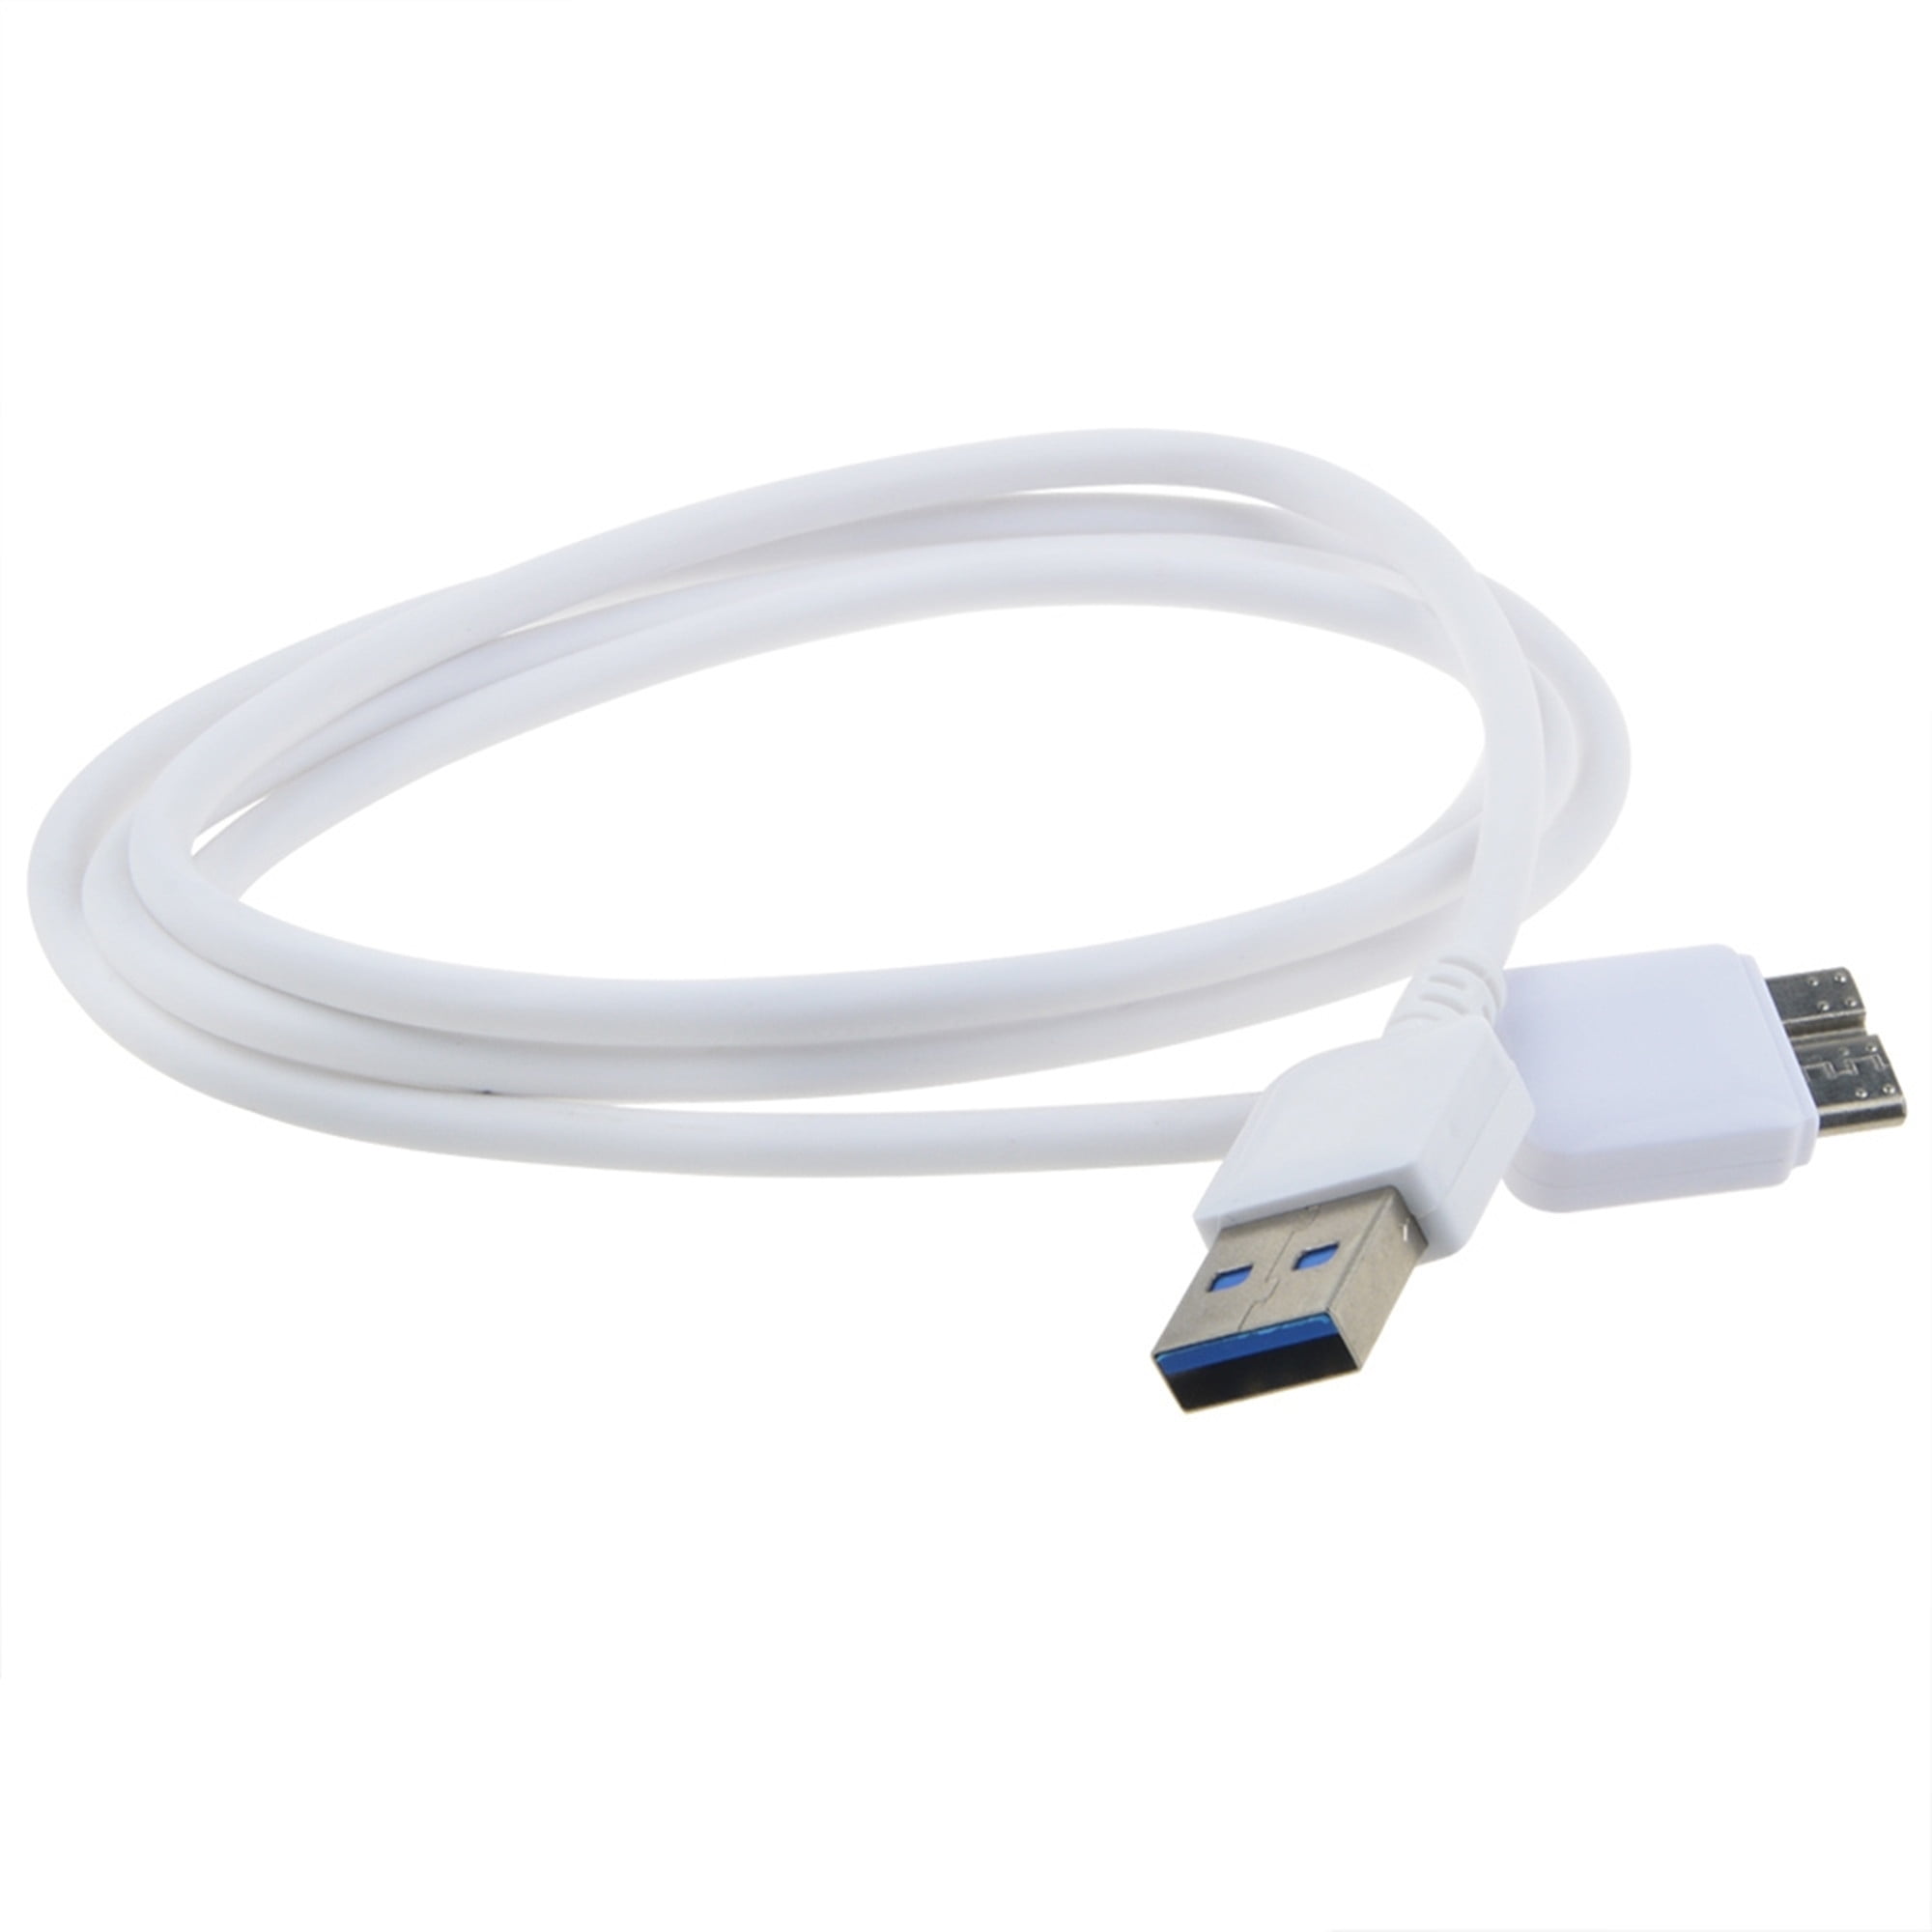 WHITE USB 3.0 DATA CORD FOR TOSHIBA CANVIO CONNECT HDTC720XK3C1 HDTC720XL3C1